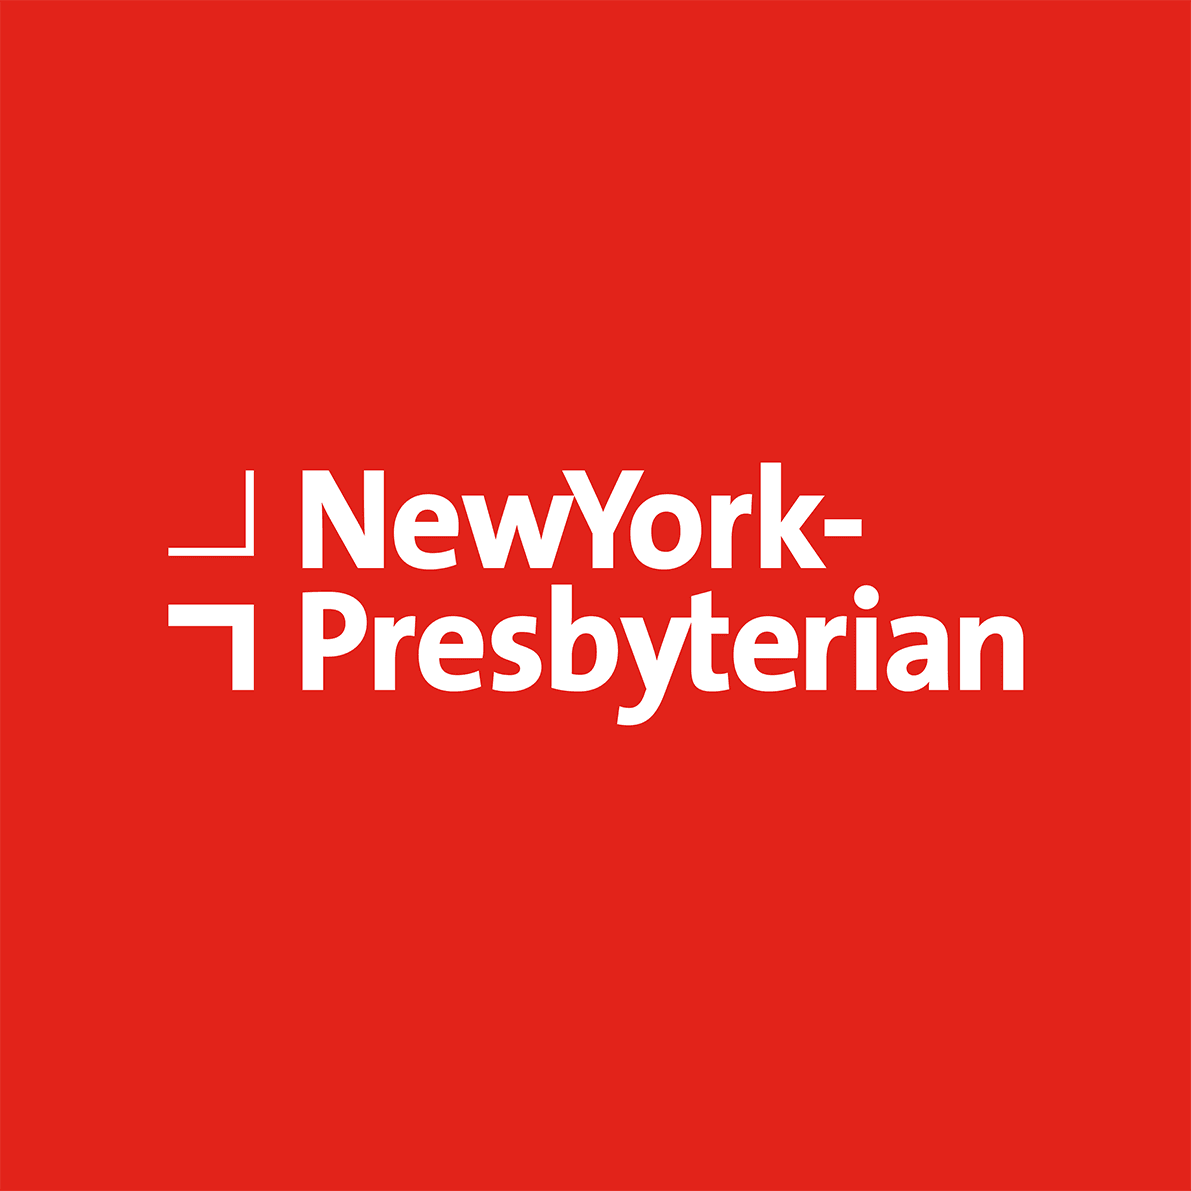 New York-Presbyterian Queens